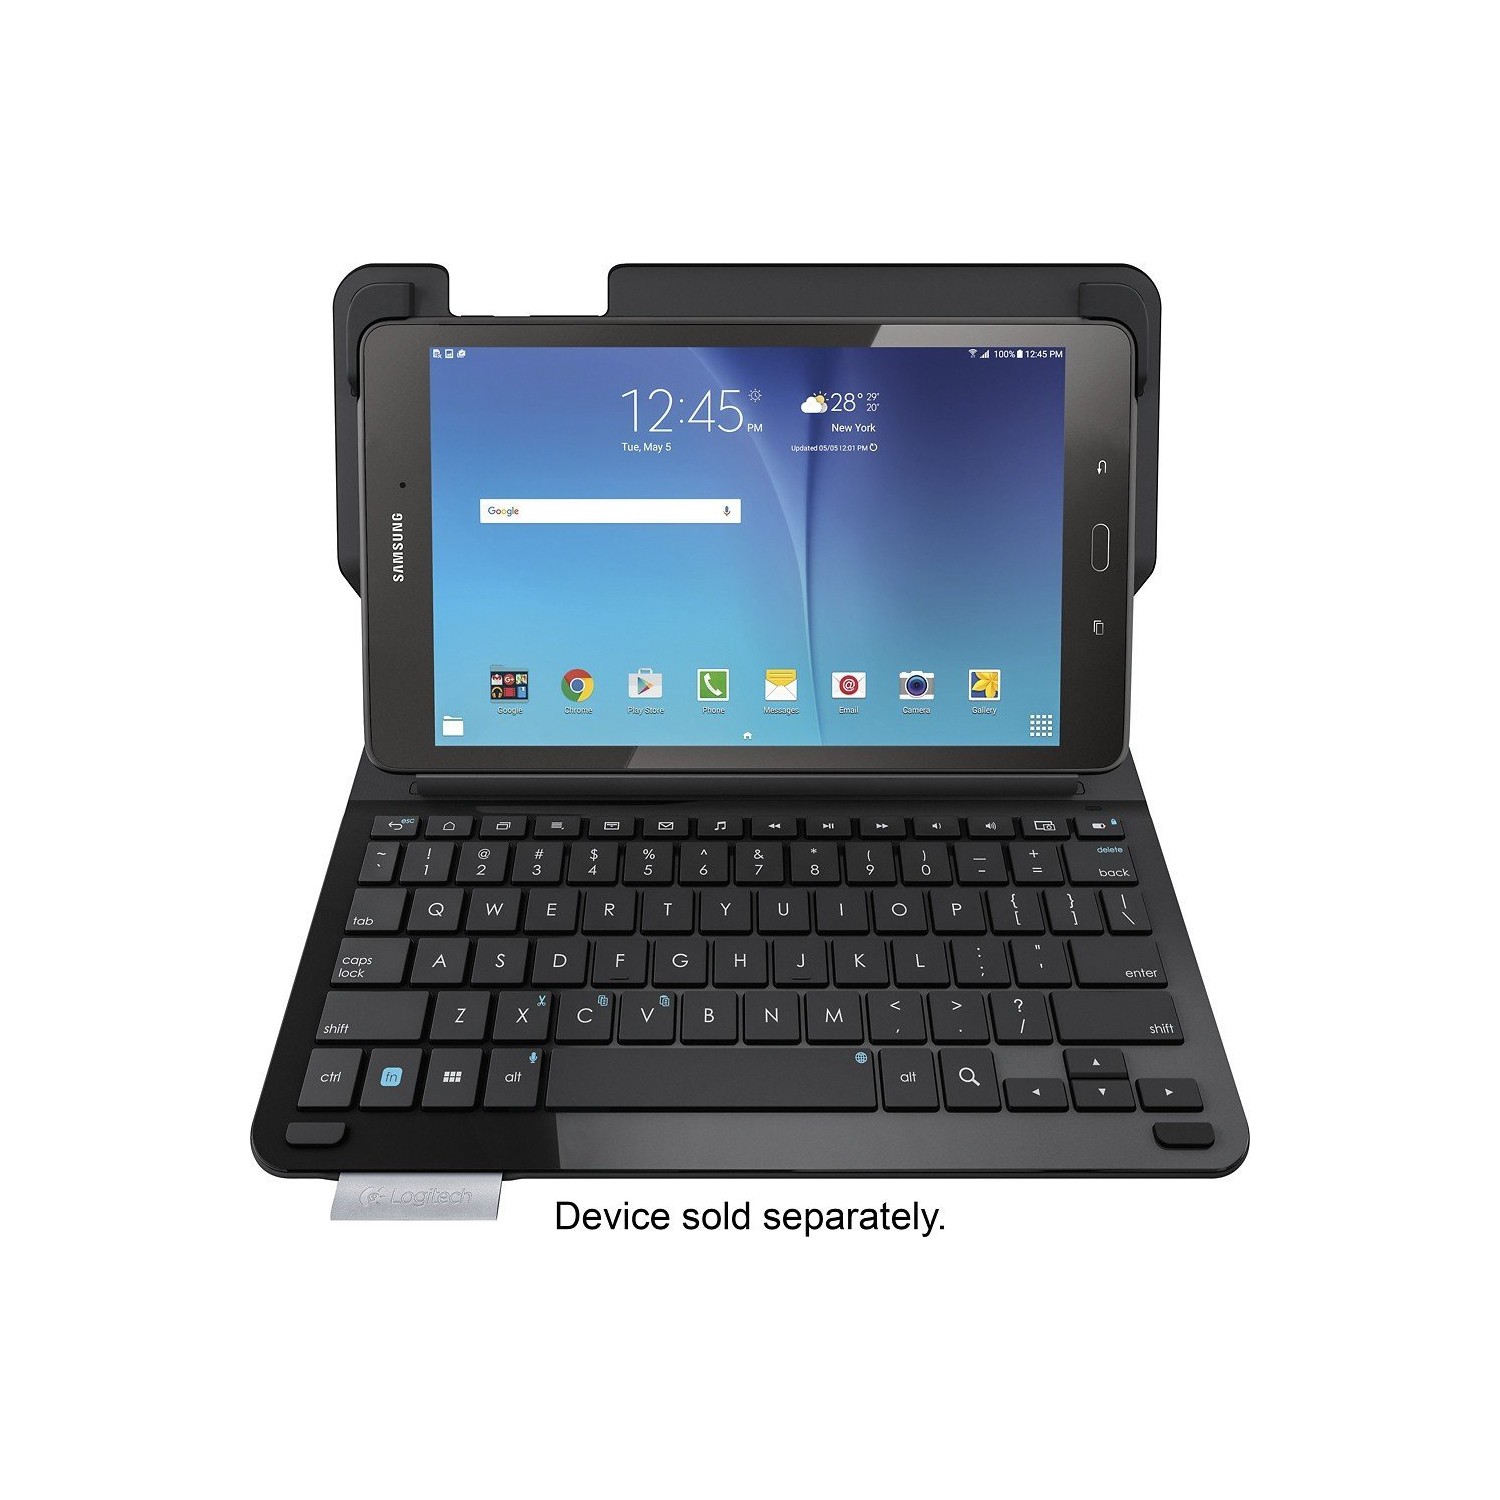 Refurbished (Good) Logitech - Type S Keyboard Folio Case for Samsung Galaxy Tab E 9.6 - Model: 920-008161, Refurbished